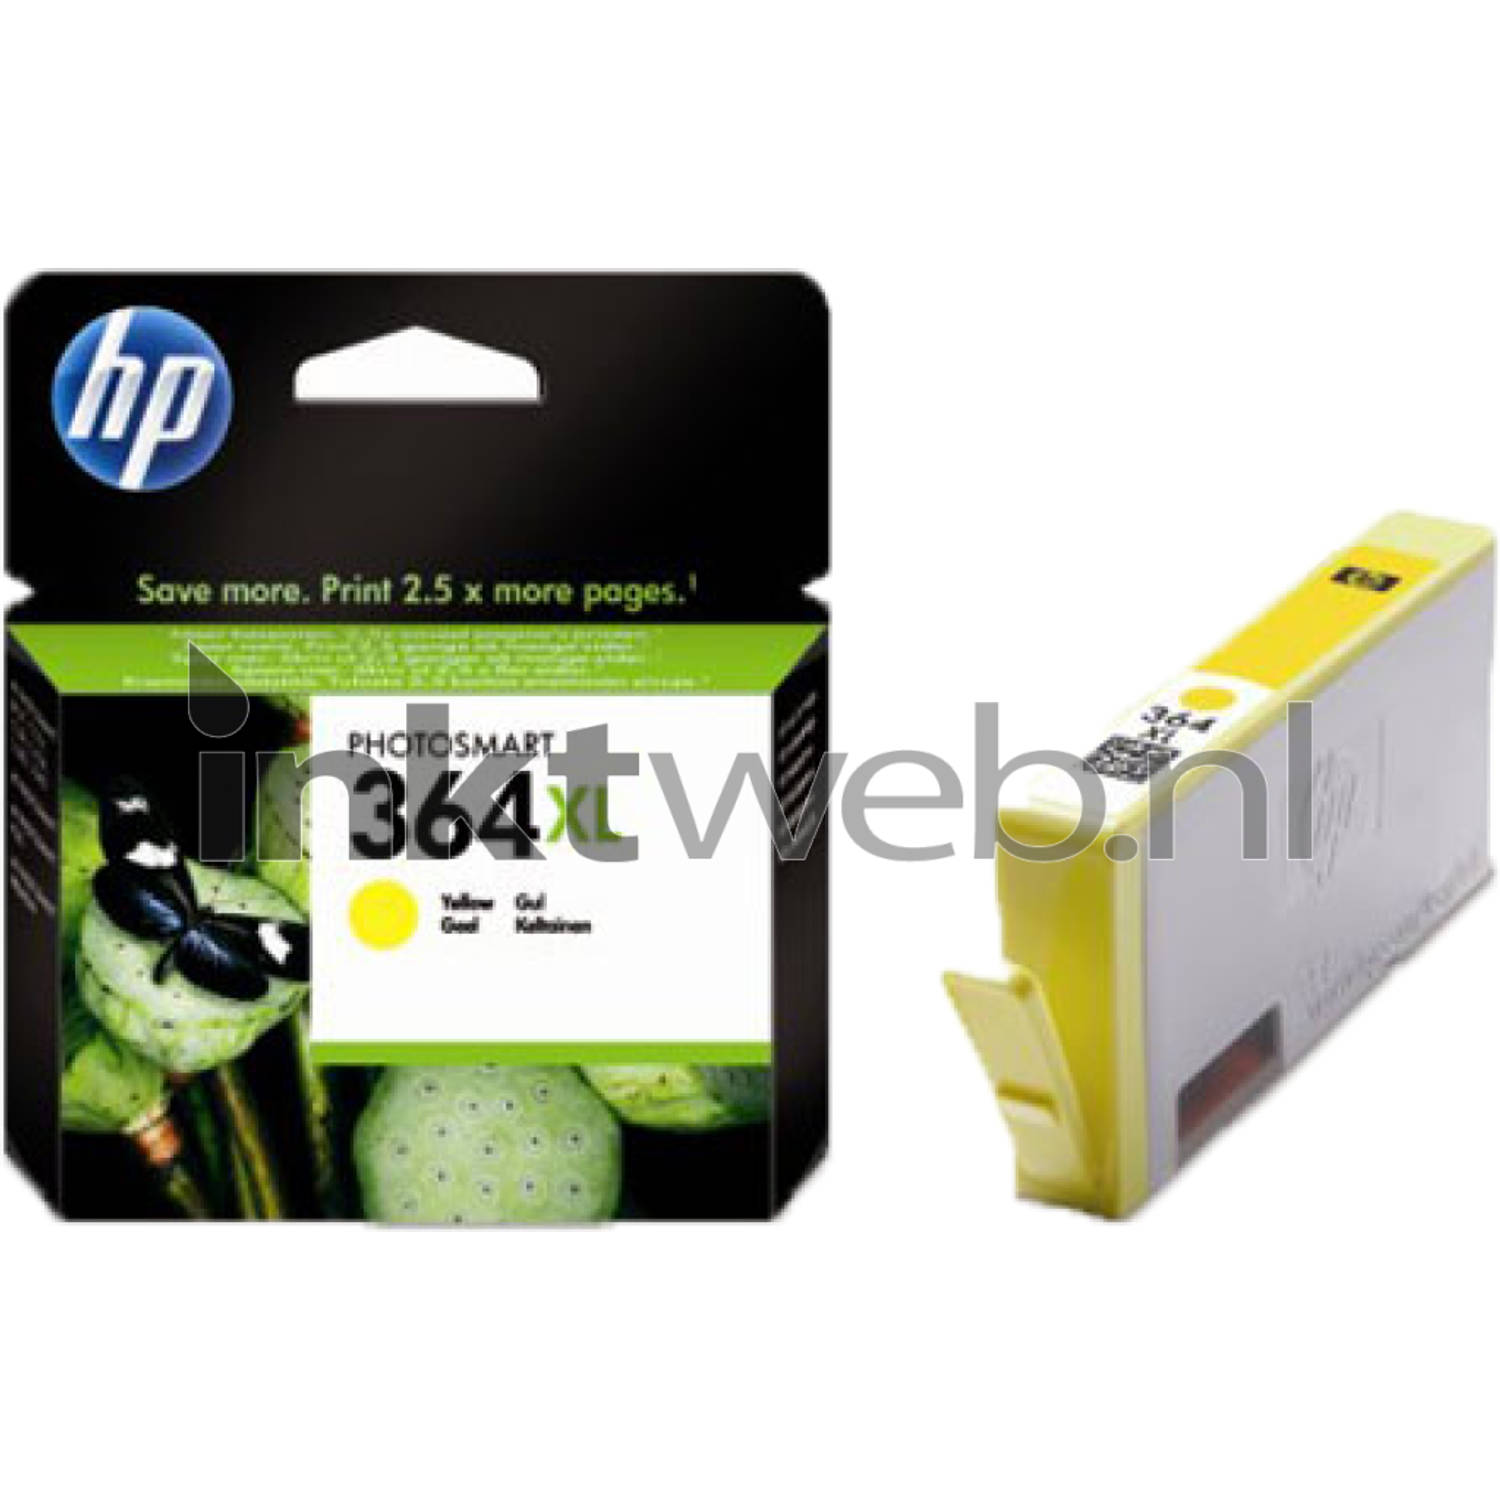 HP 364XL geel cartridge